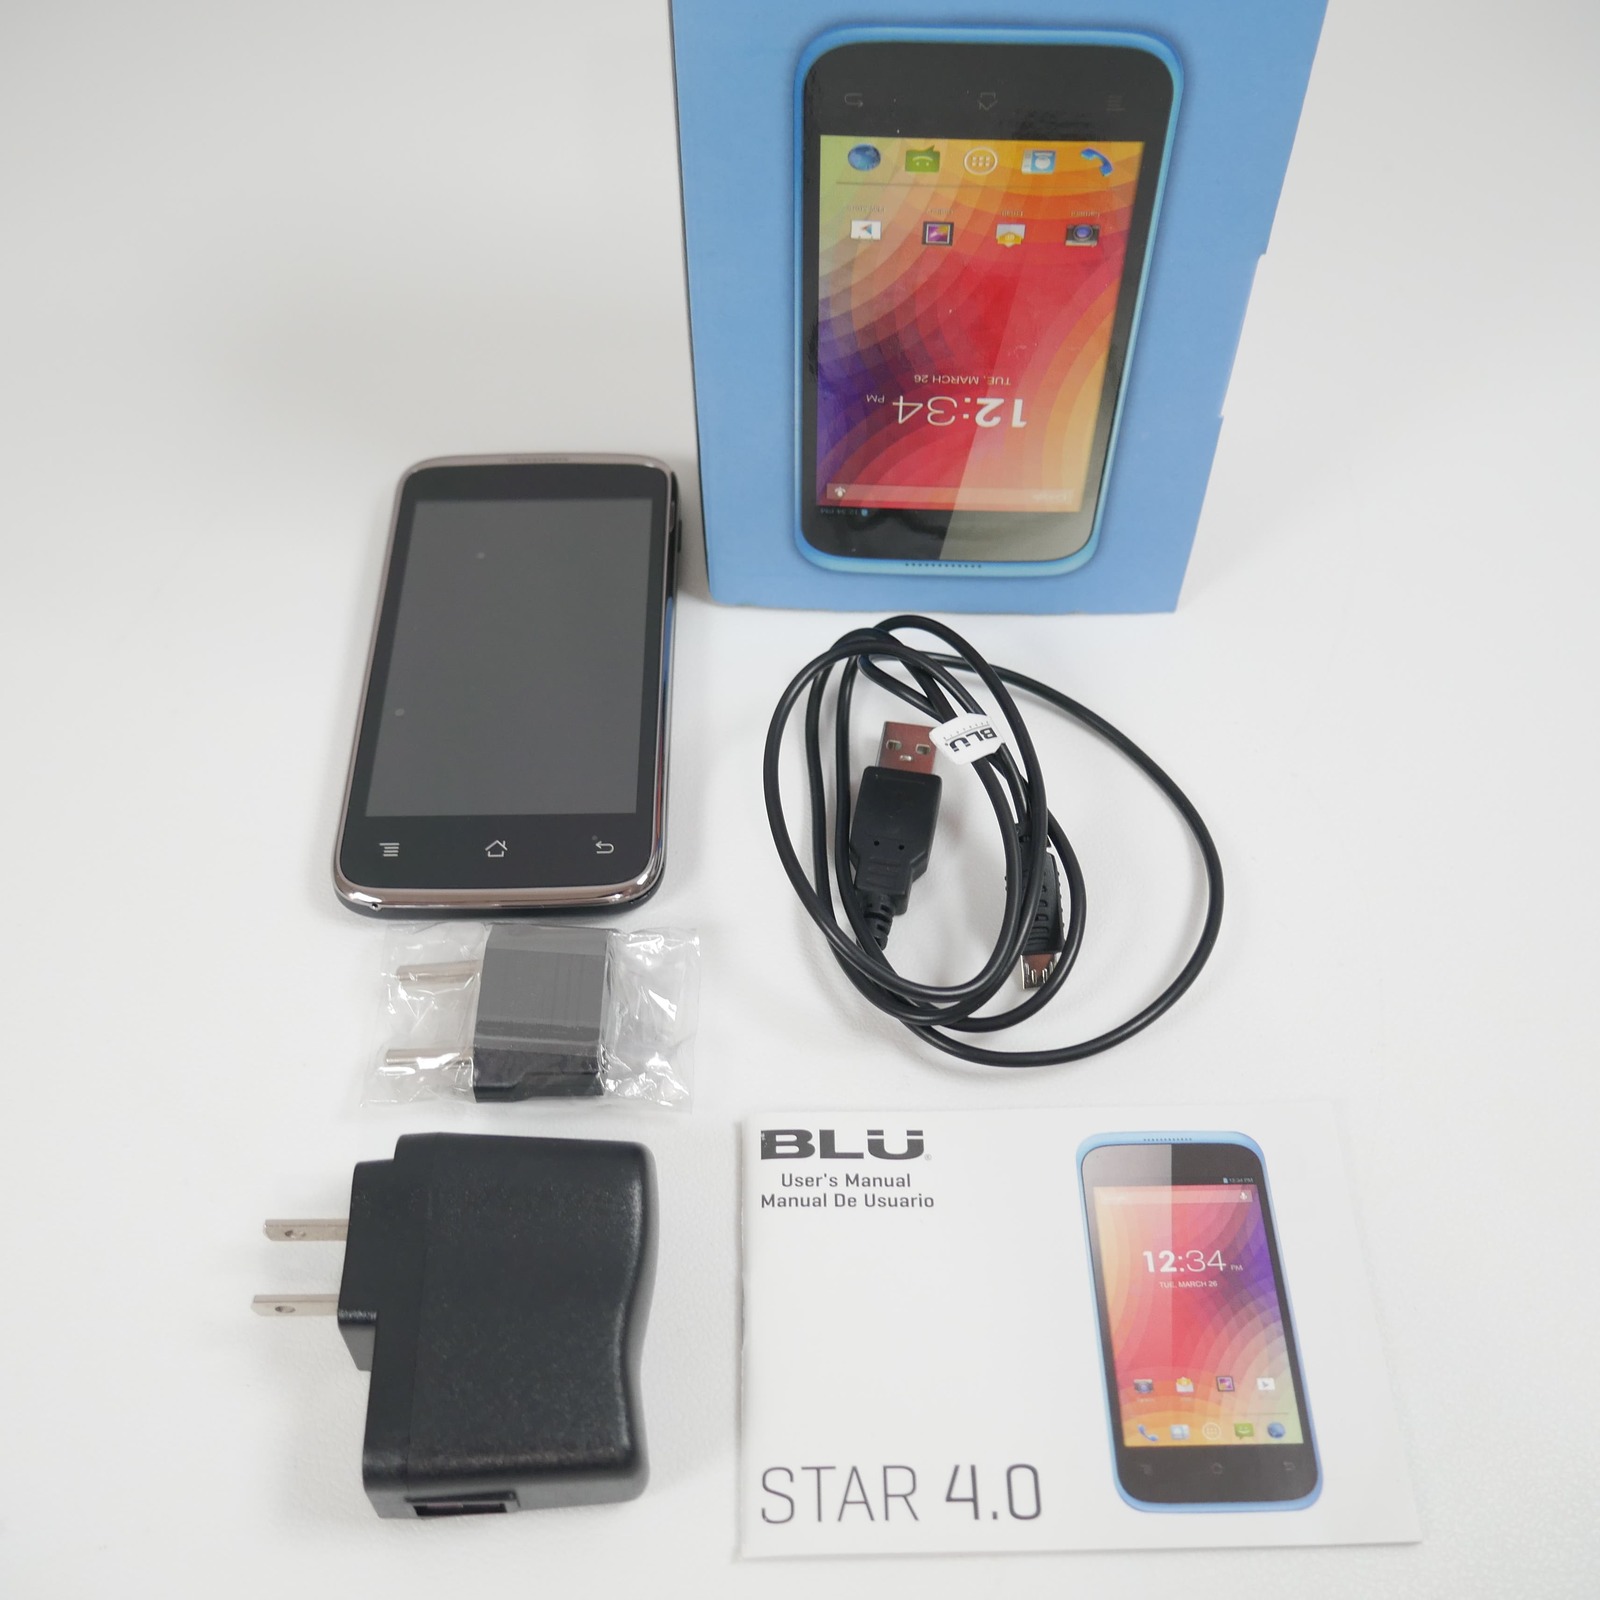 BLU Star 4.0 Dual SIM Silver/Black Unlocked Android Phone - $99.99